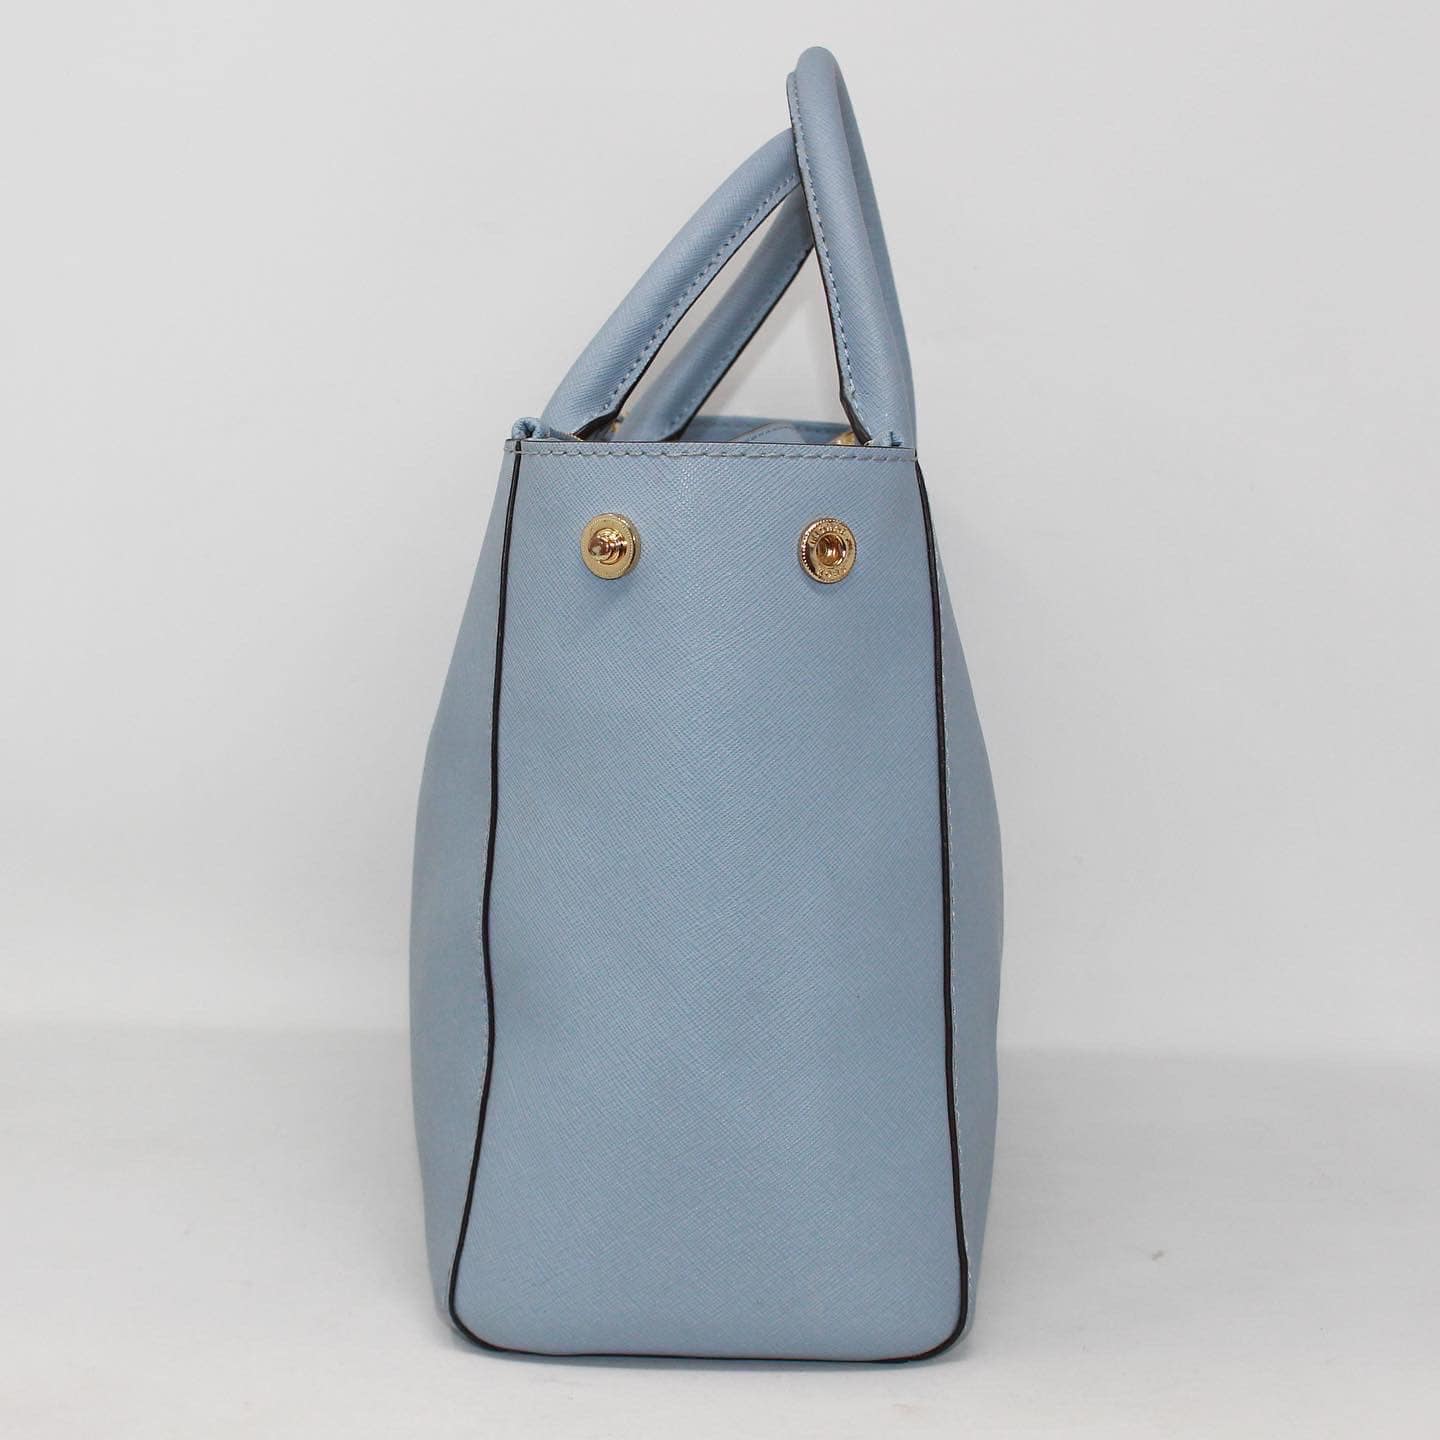 Buy the Michael Kors Navy Blue Tan Leather Tote Bag